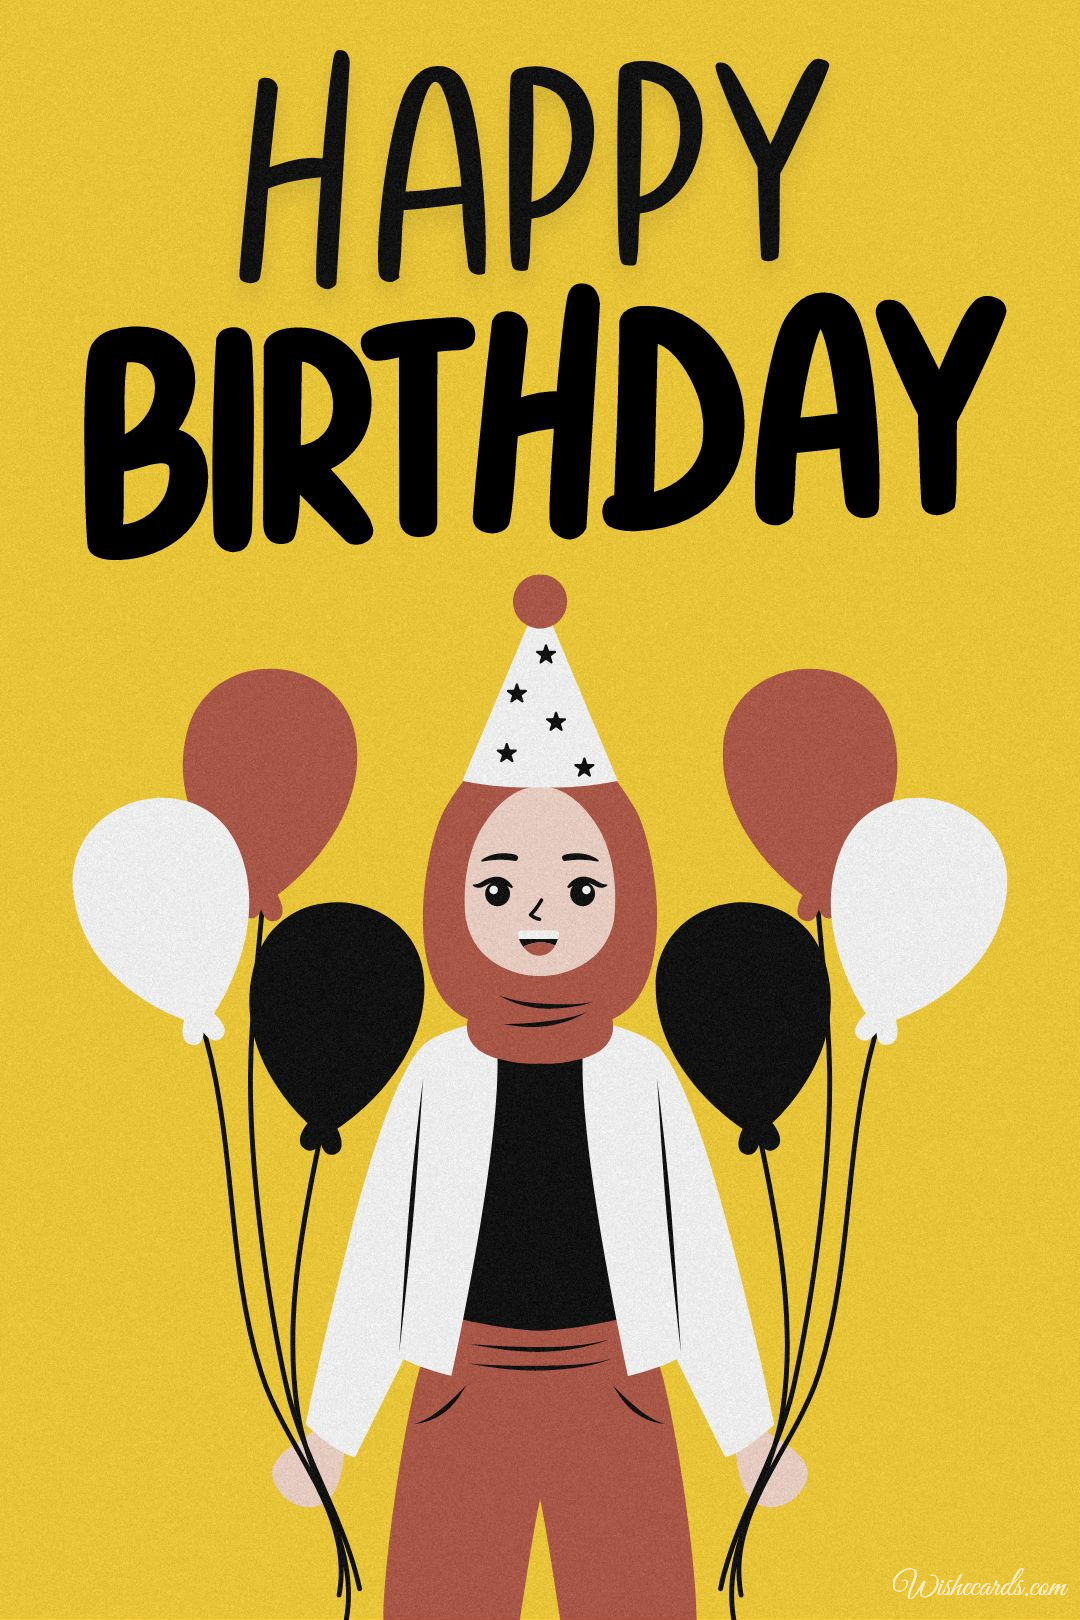 Muslim Birthday Image For Her